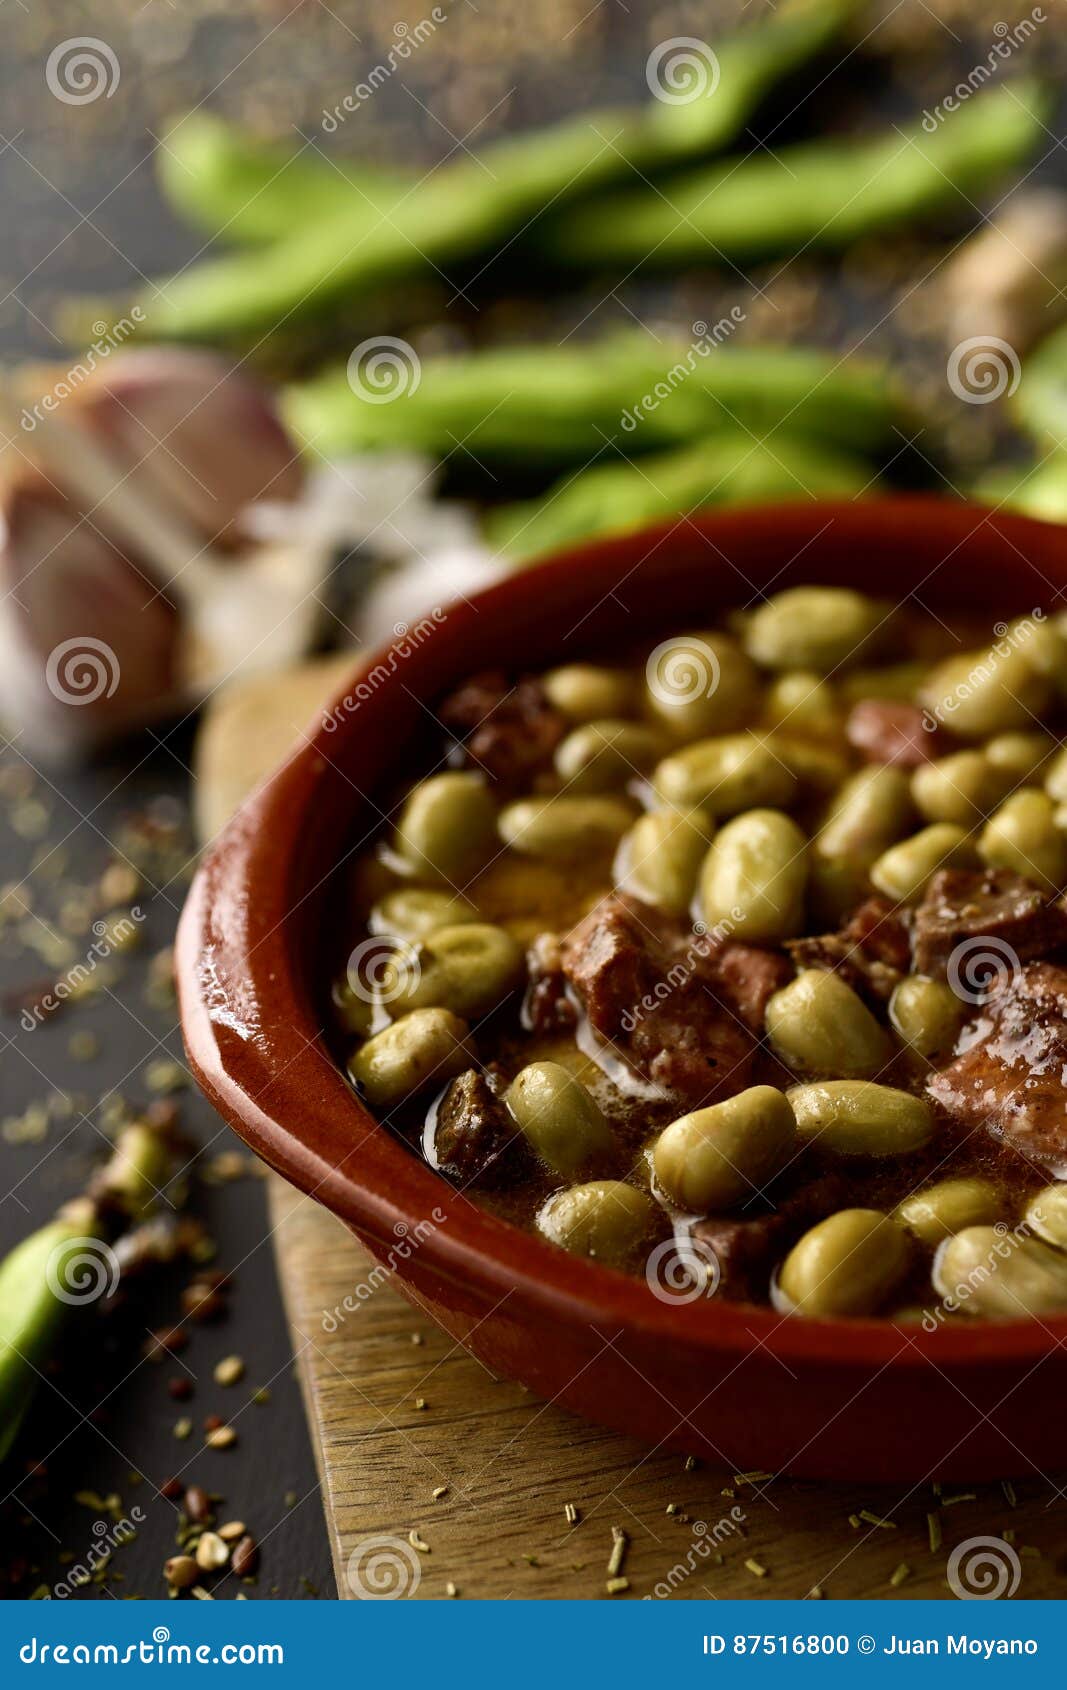 habas a la catalana, a spanish recipe of broad beans